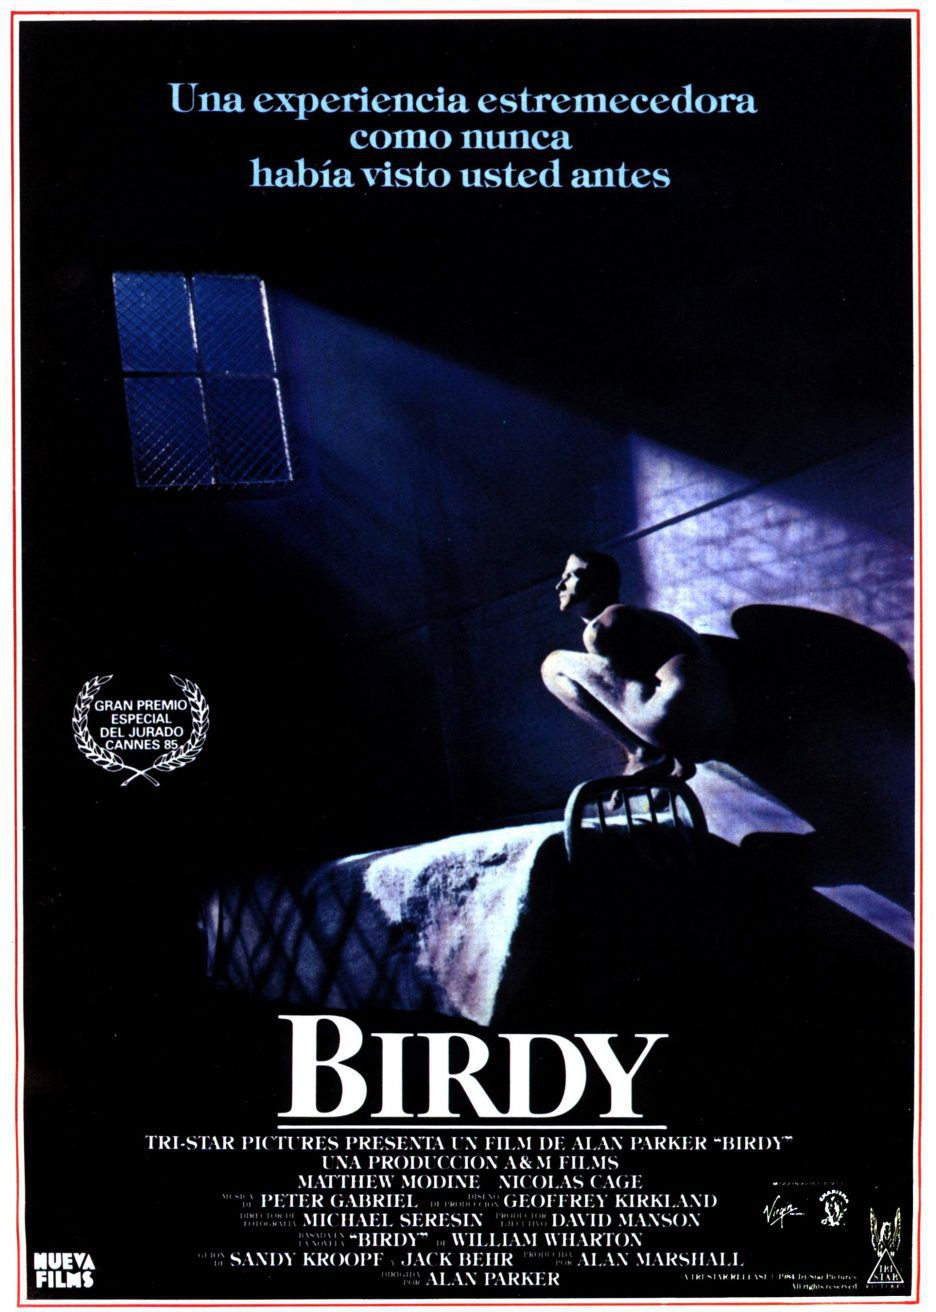 Cartel de Birdy - EEUU